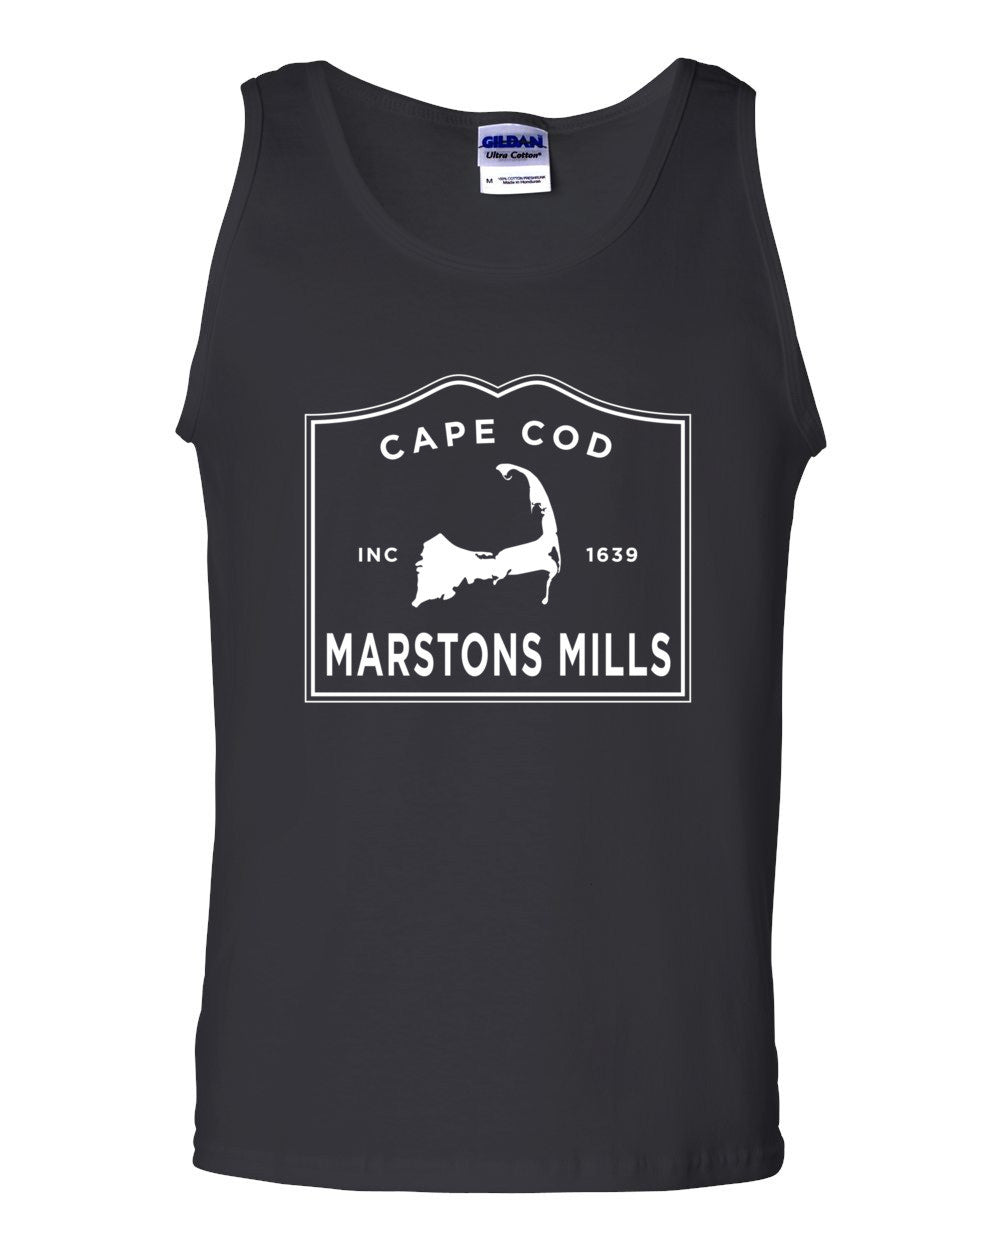 Marstons Mills Cape Cod Tank Top